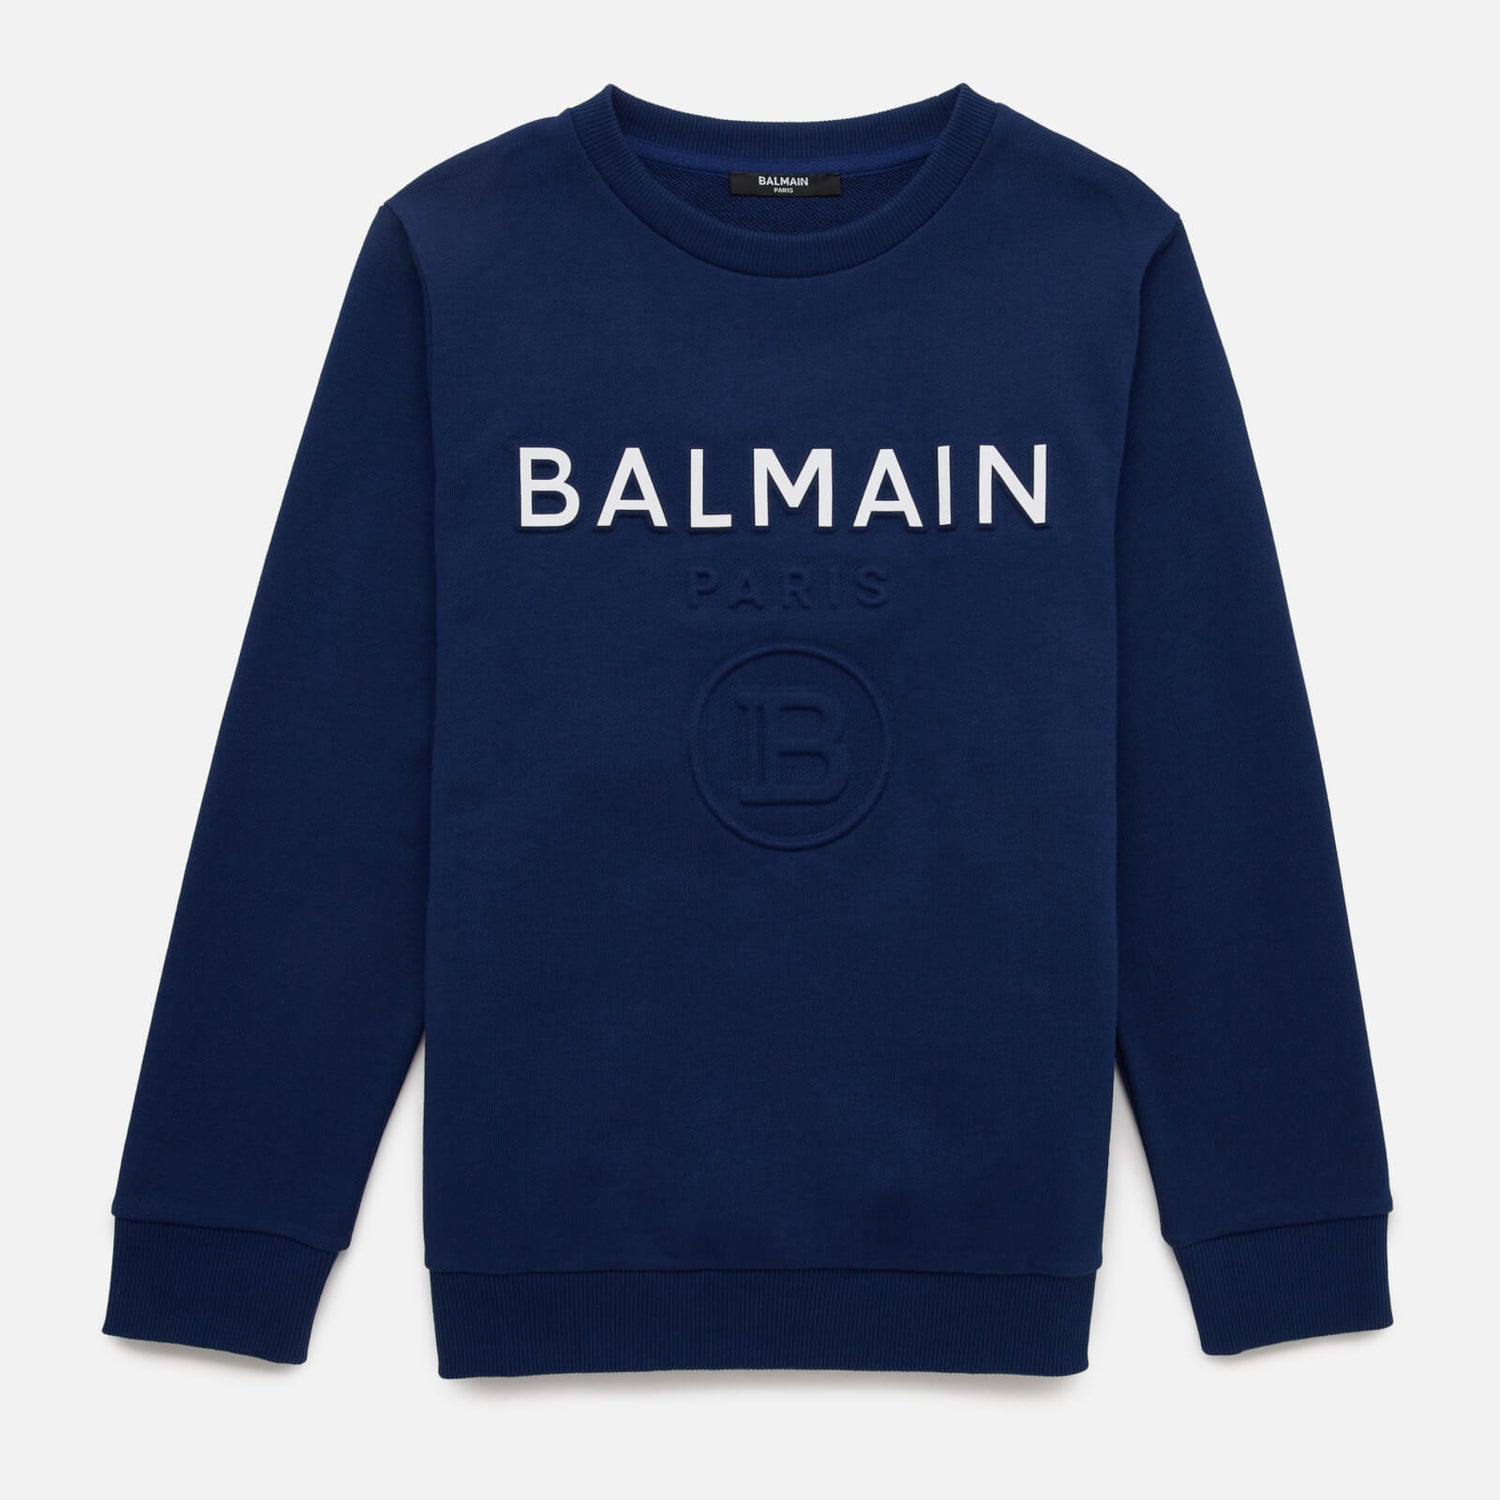 Balmain Boys' Sweatshirt - Blue - 8 Years